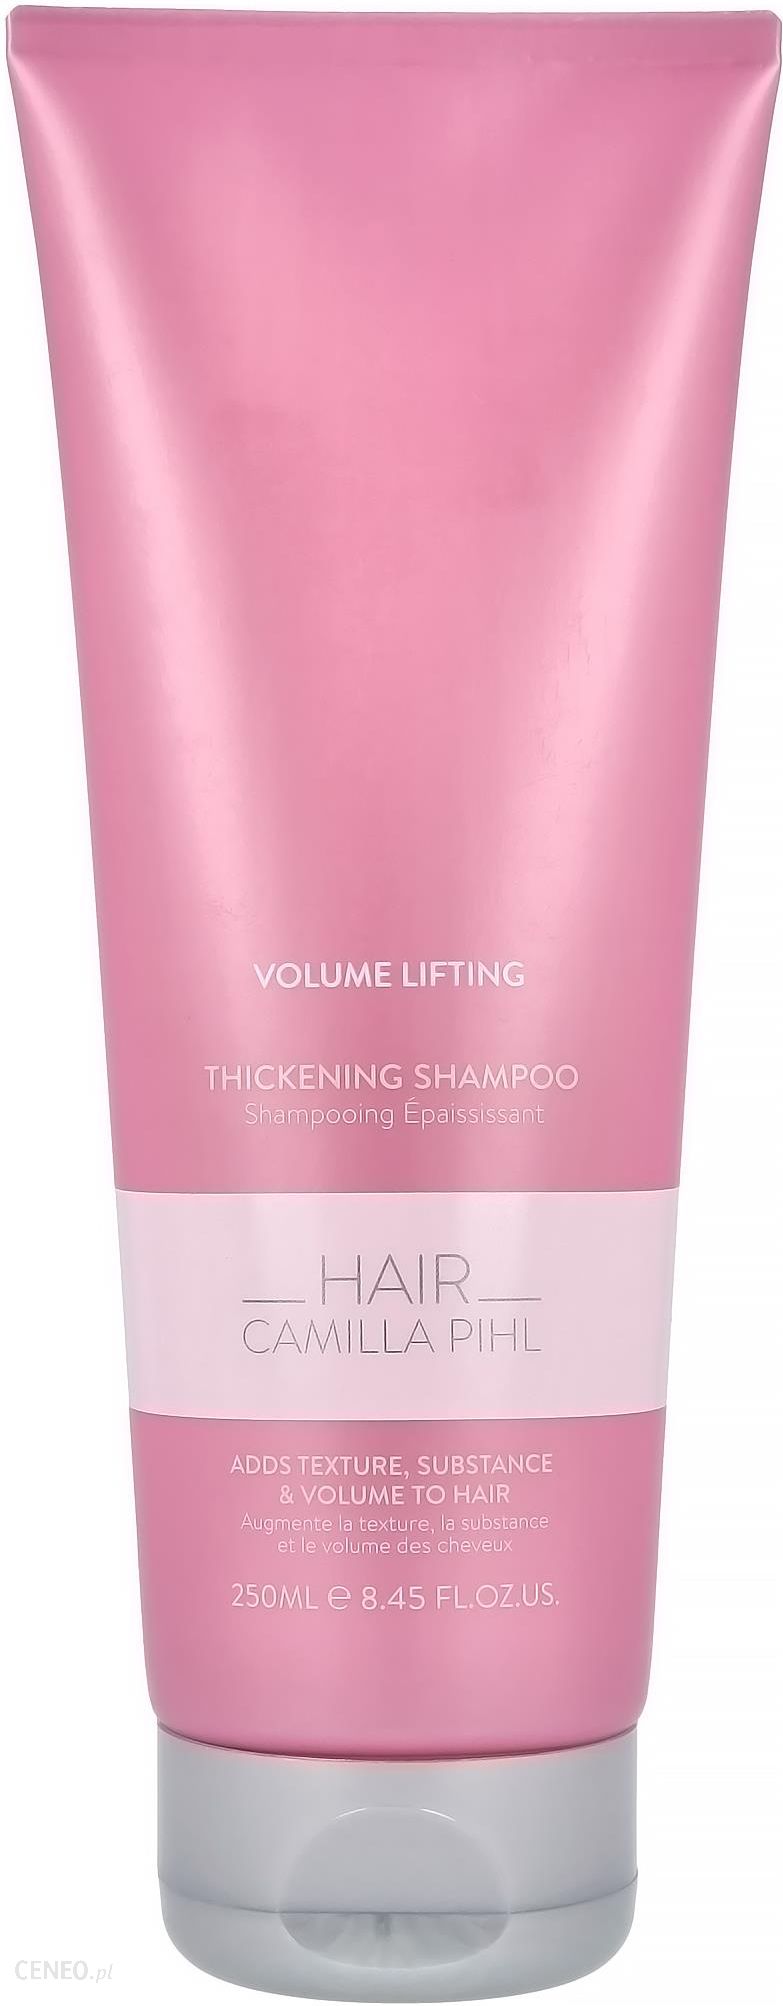 Camilla Pihl Cosmetics Hair Hair Volume Lifting Szampon Do Włosów 250 ml